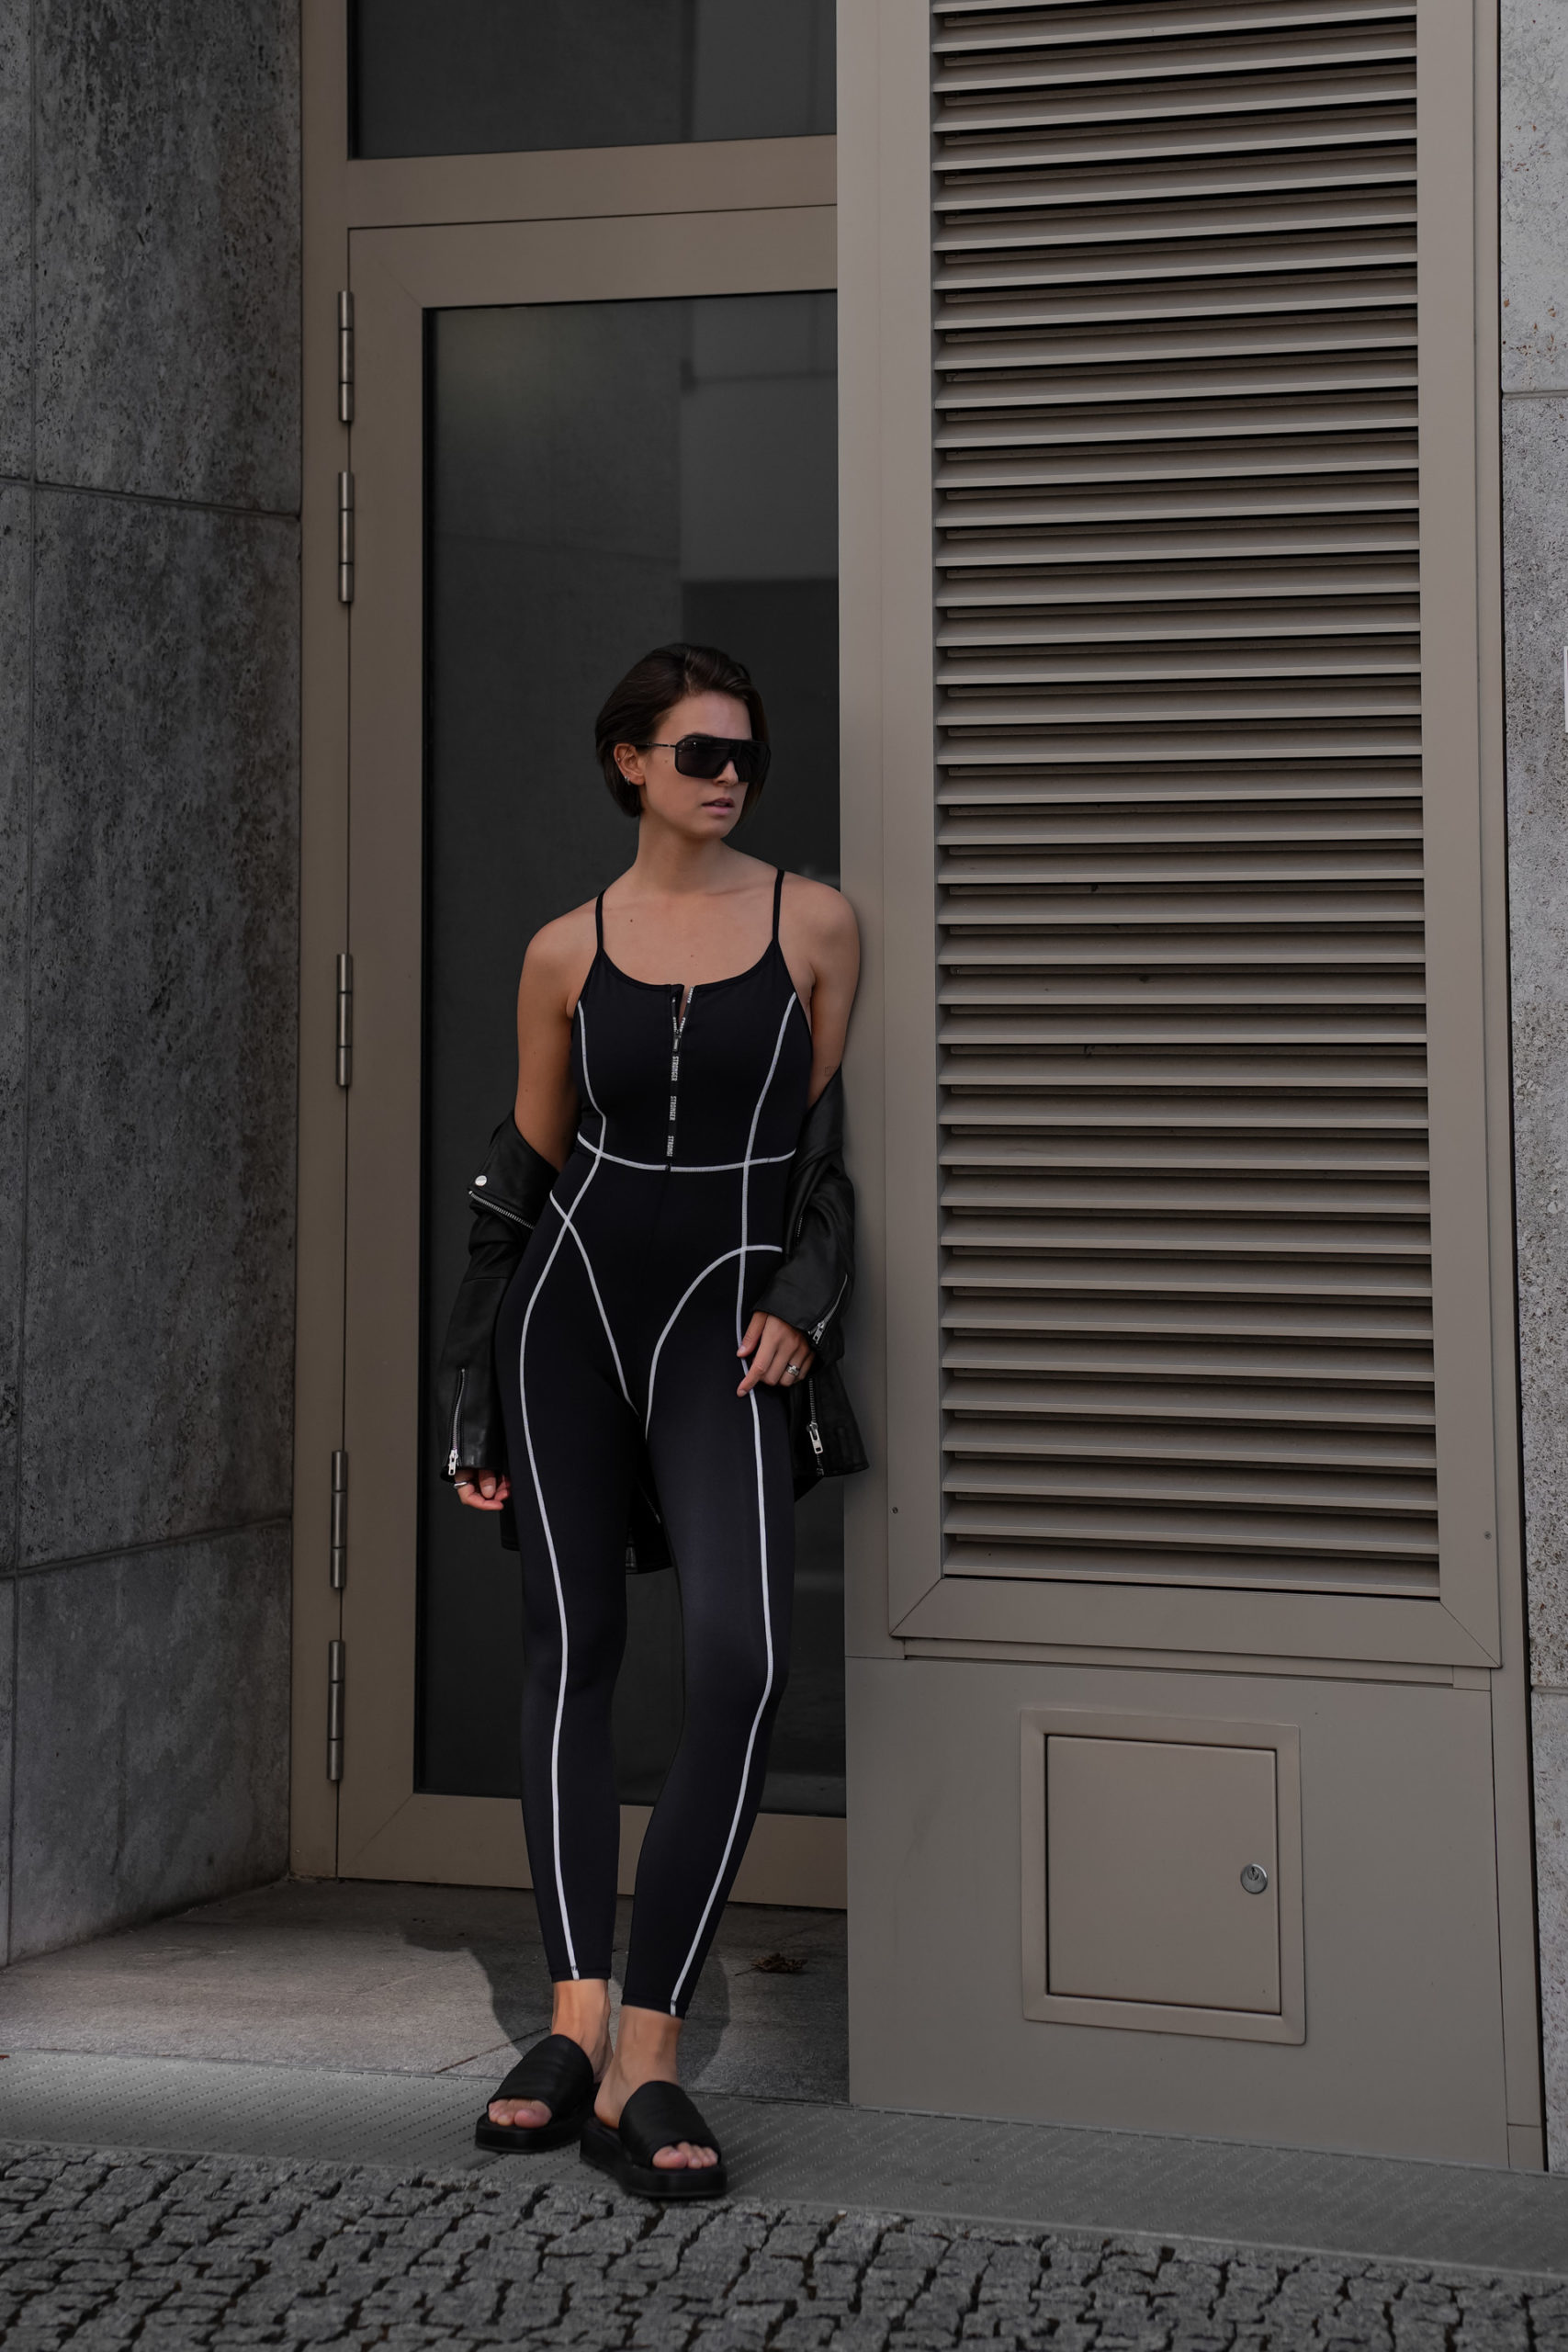 Berlin Bodysuit – Conscious Clothing